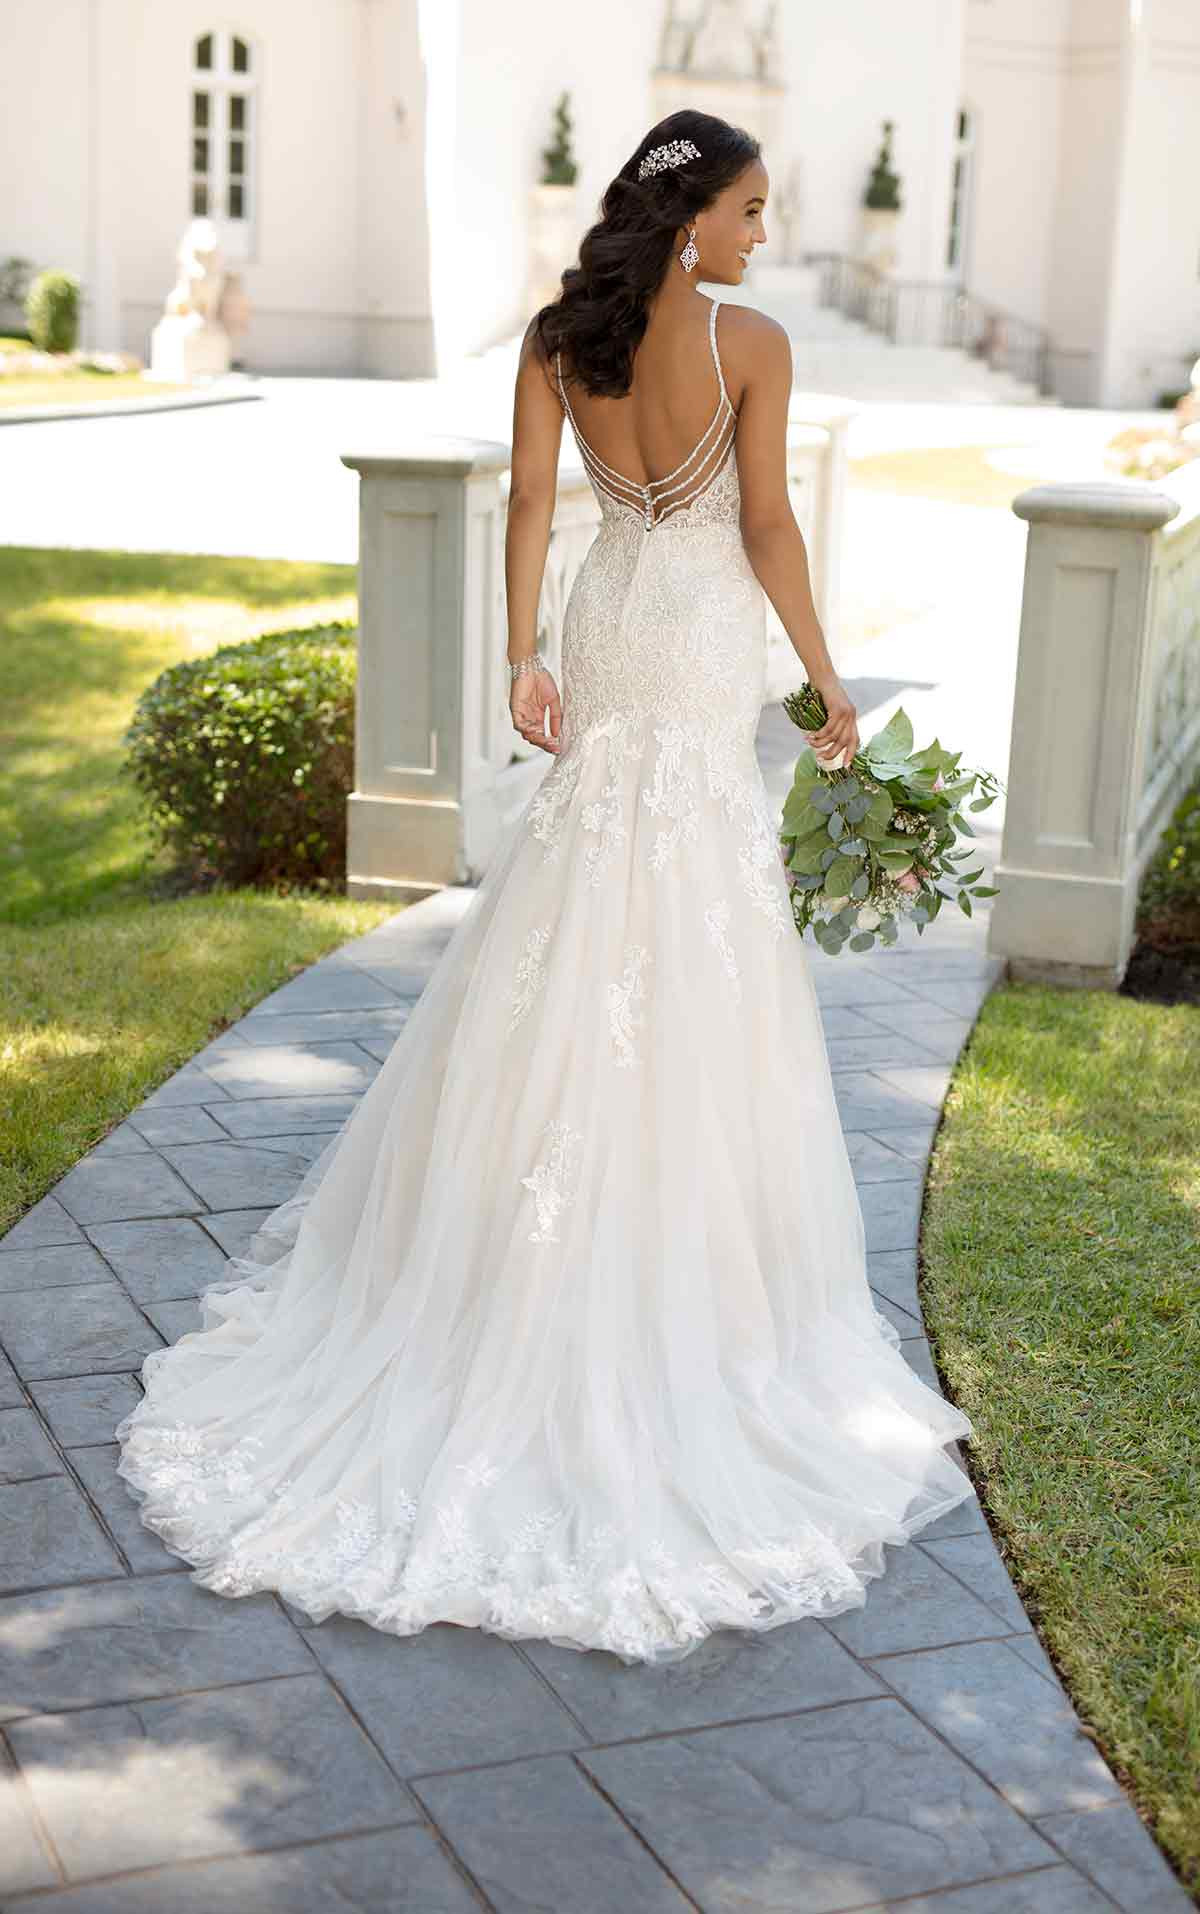 Affordable Wedding Gowns
 Affordable Wedding Dress Designer Stella York Reveals New